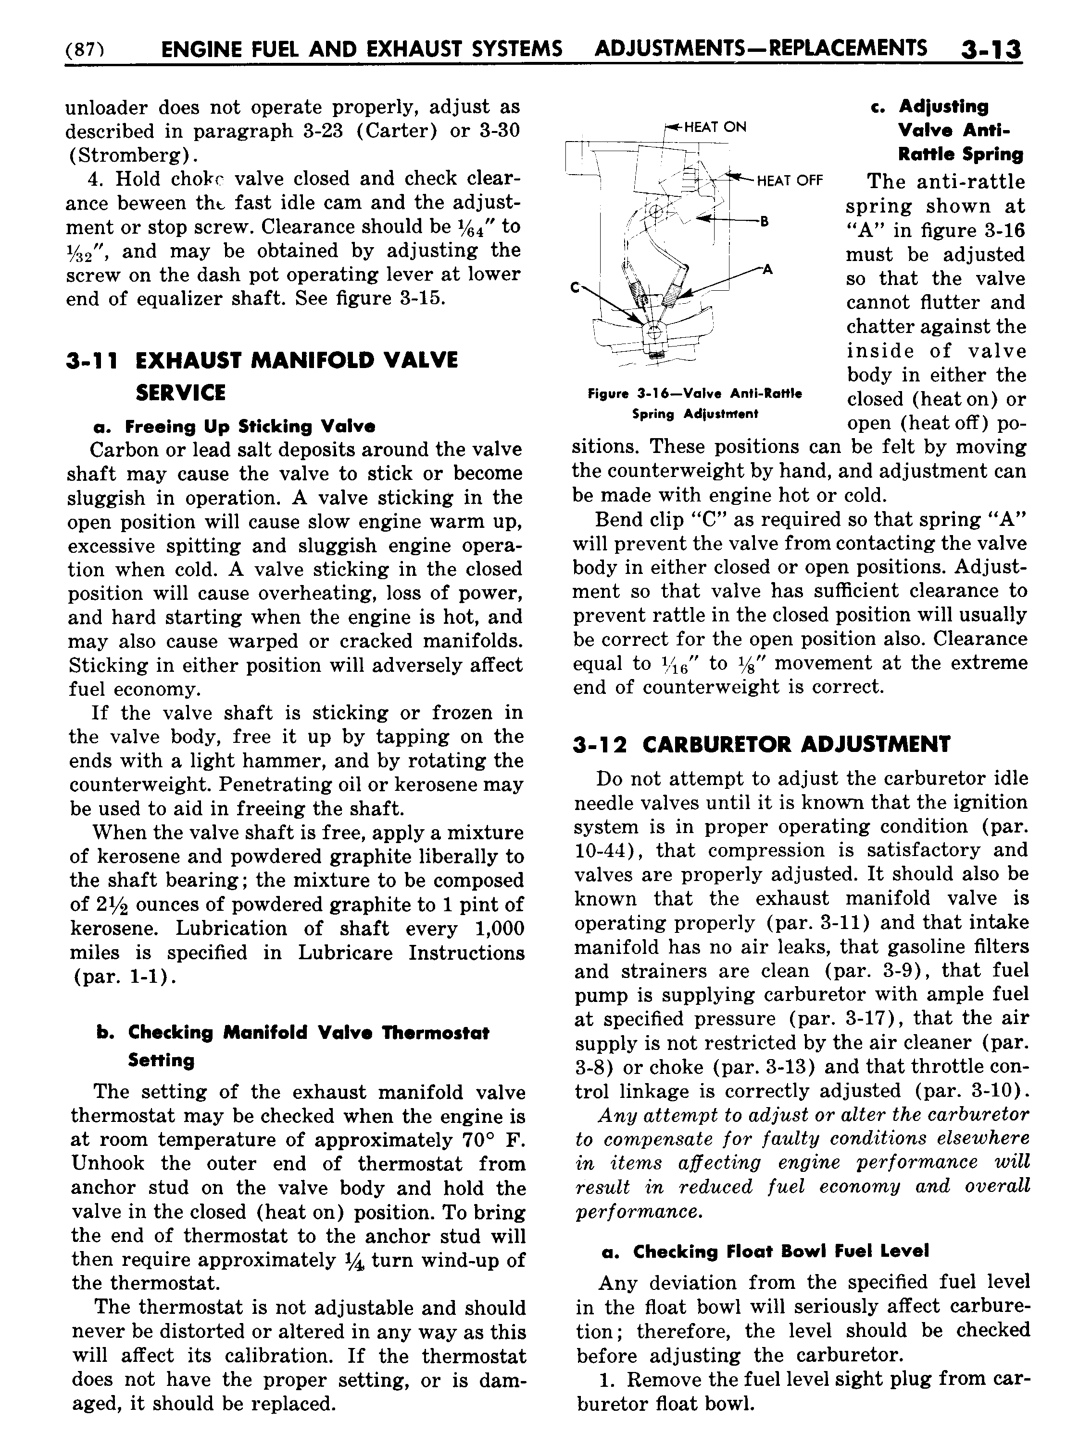 n_04 1948 Buick Shop Manual - Engine Fuel & Exhaust-013-013.jpg